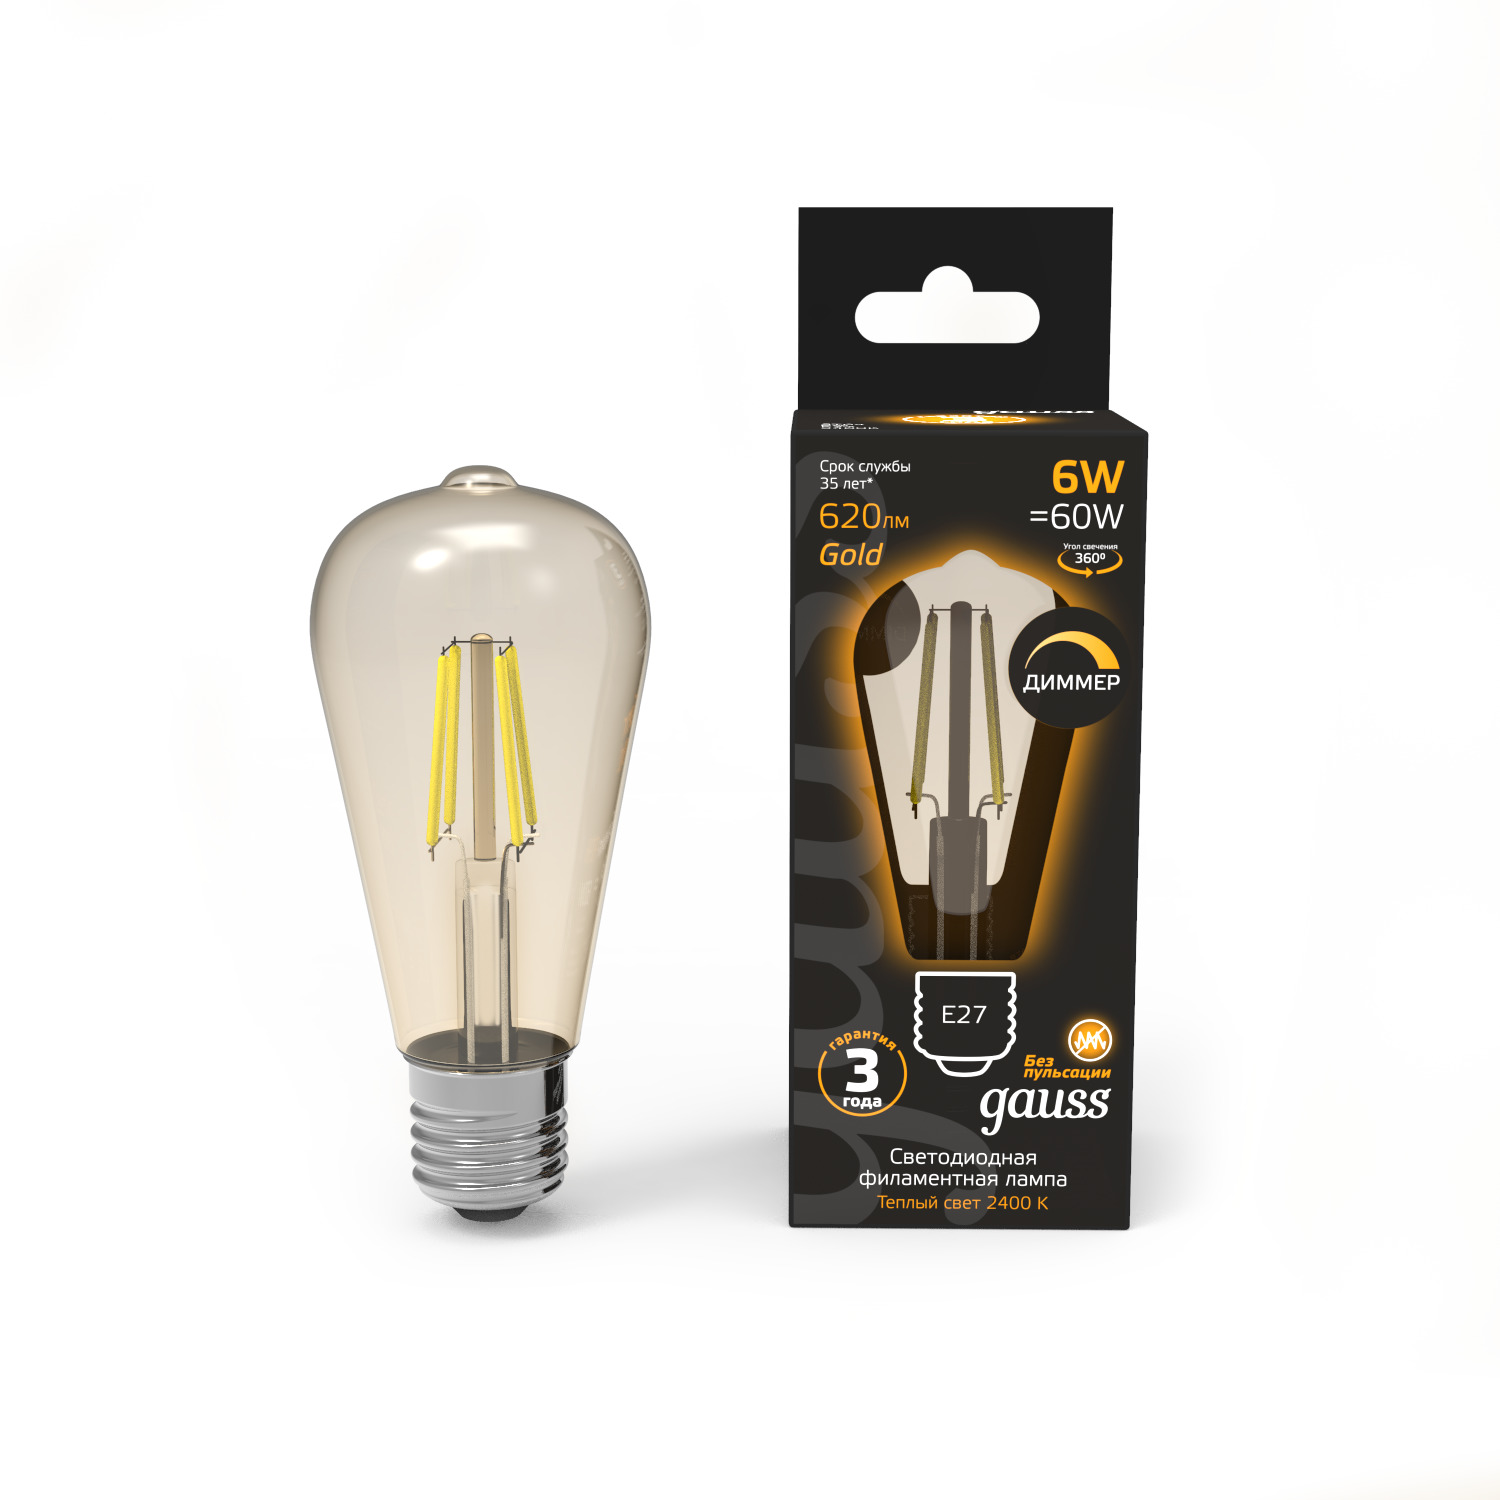 цена Лампа Gauss Filament ST64 6W 620lm 2400К Е27 golden диммируемая LED